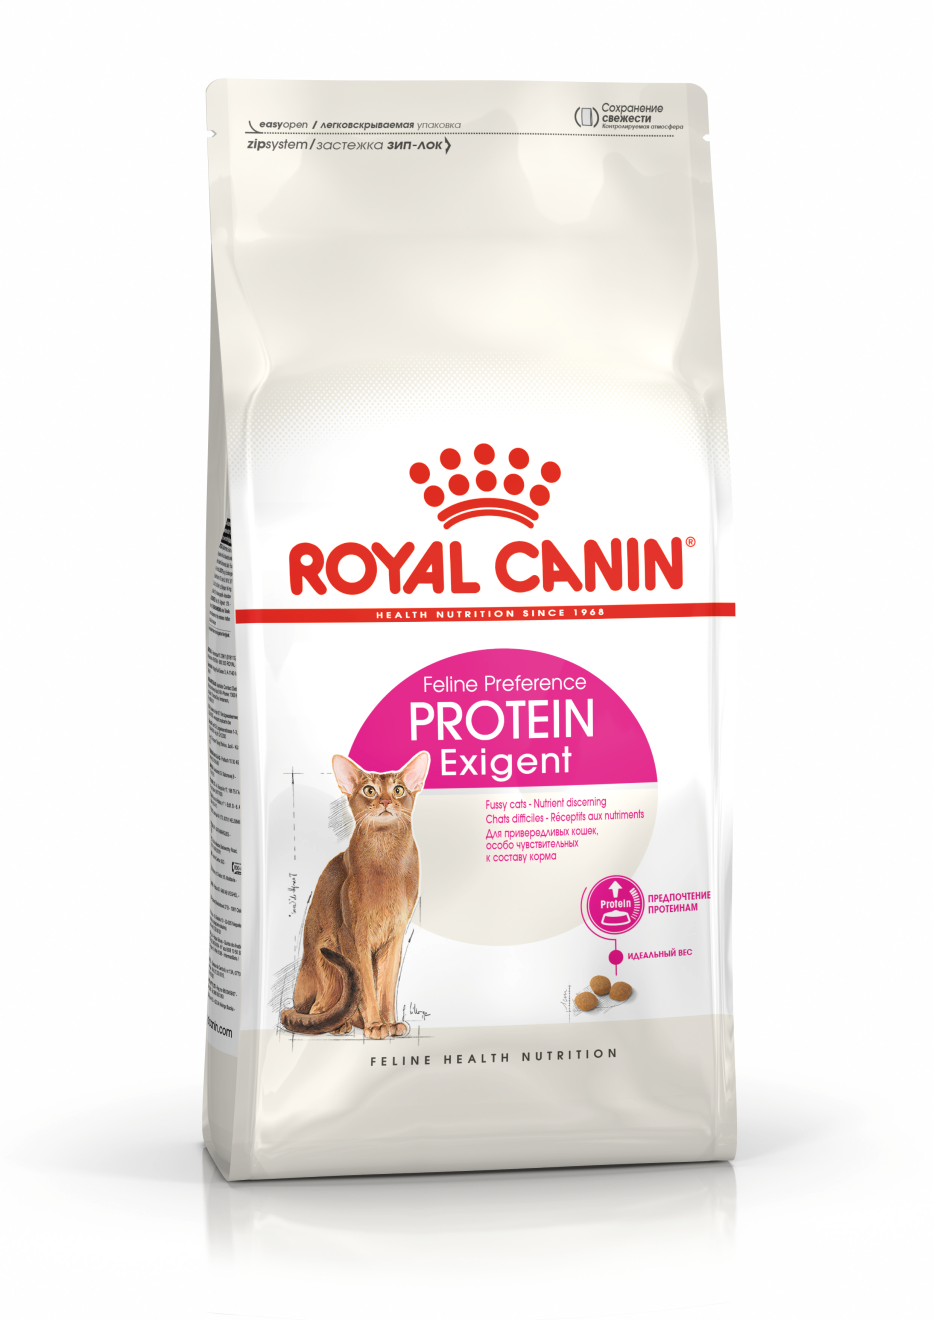 Royal Canin Cat Protein Exigent 02kg petbay.lk